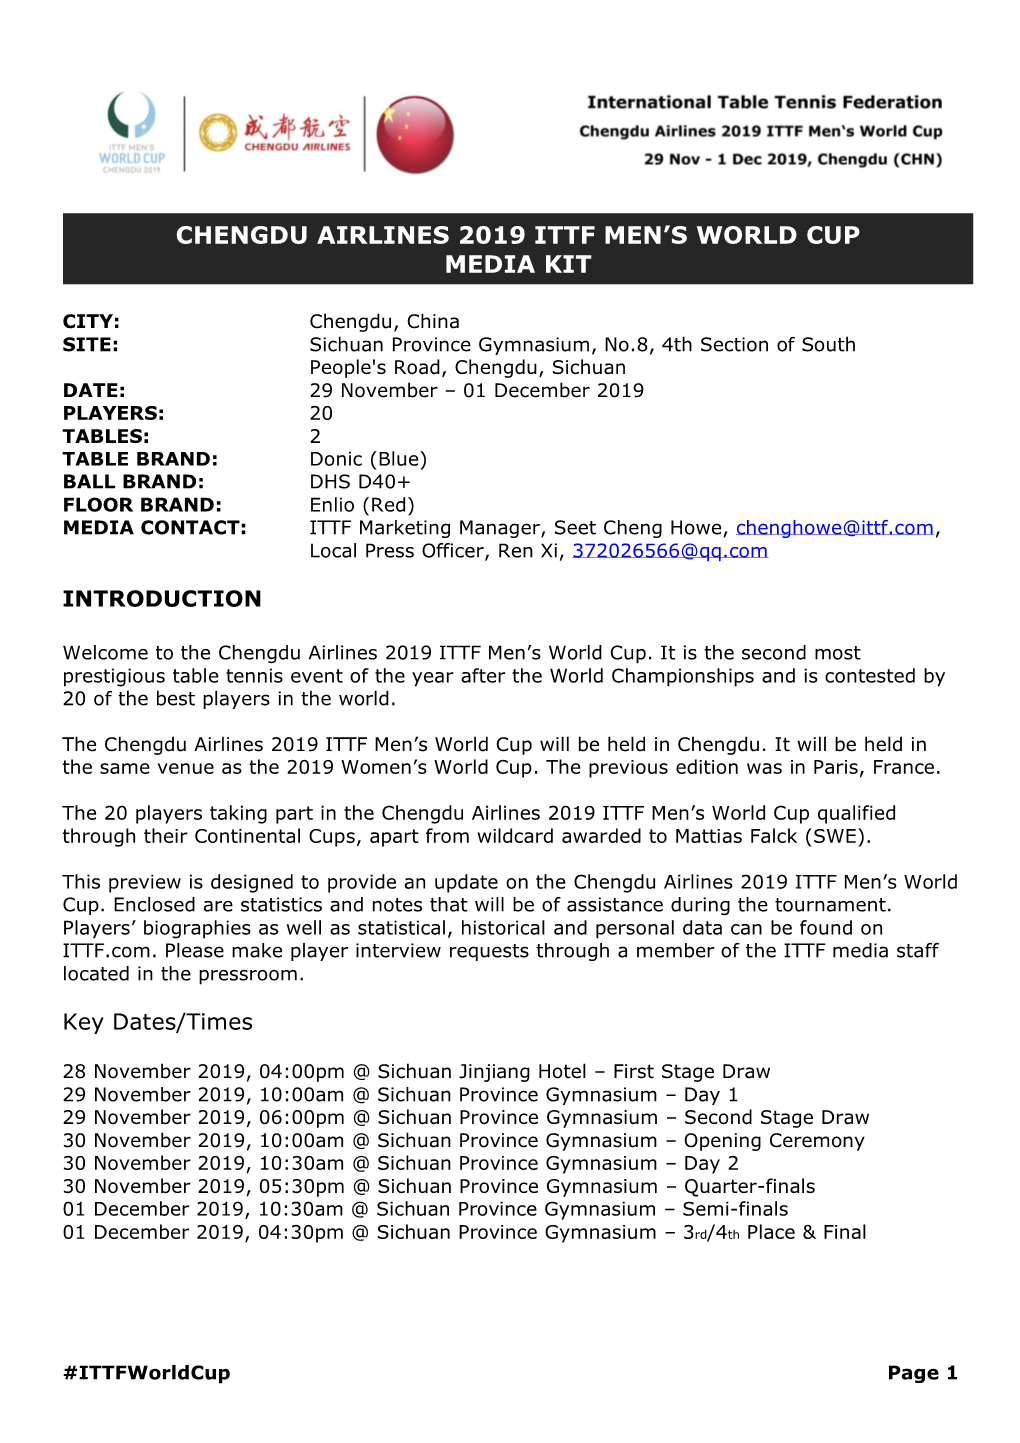 Chengdu Airlines 2019 Ittf Men's World Cup Media